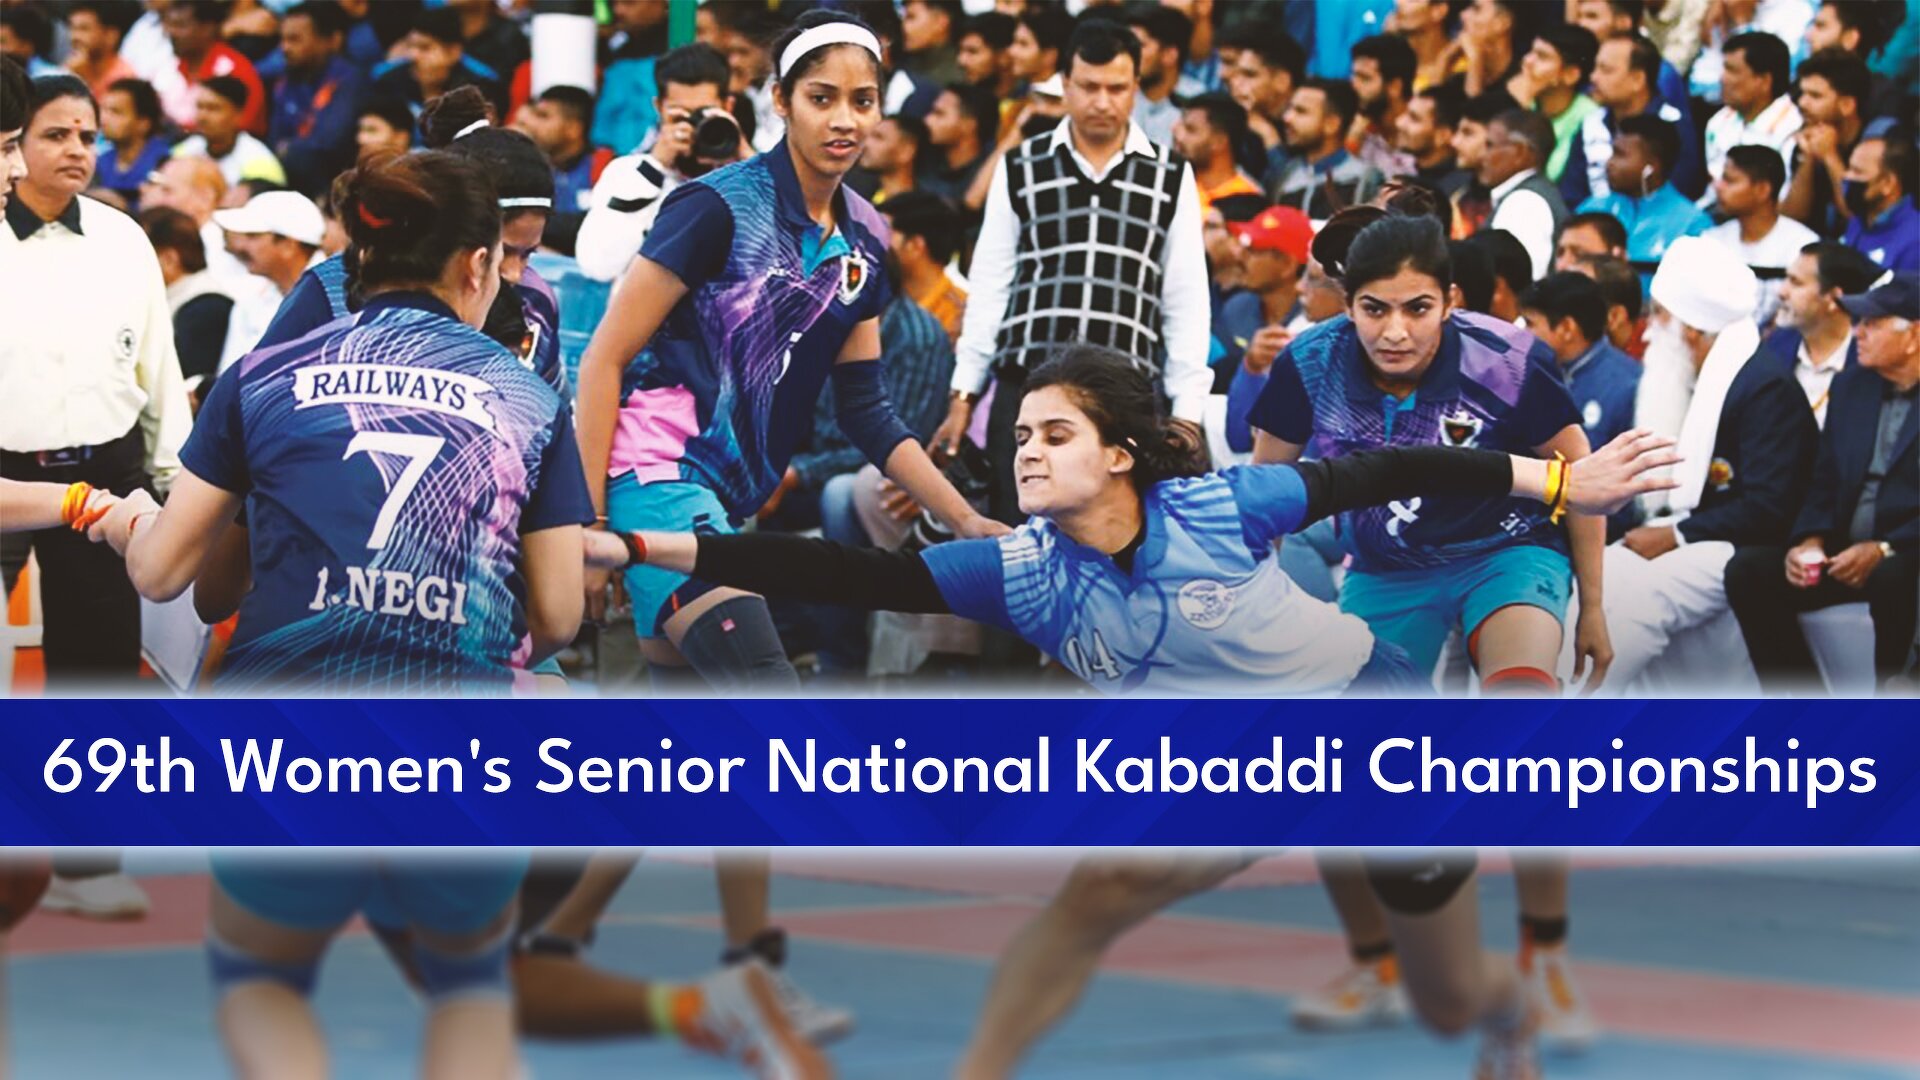 69th Women's Senior National Kabaddi Championship